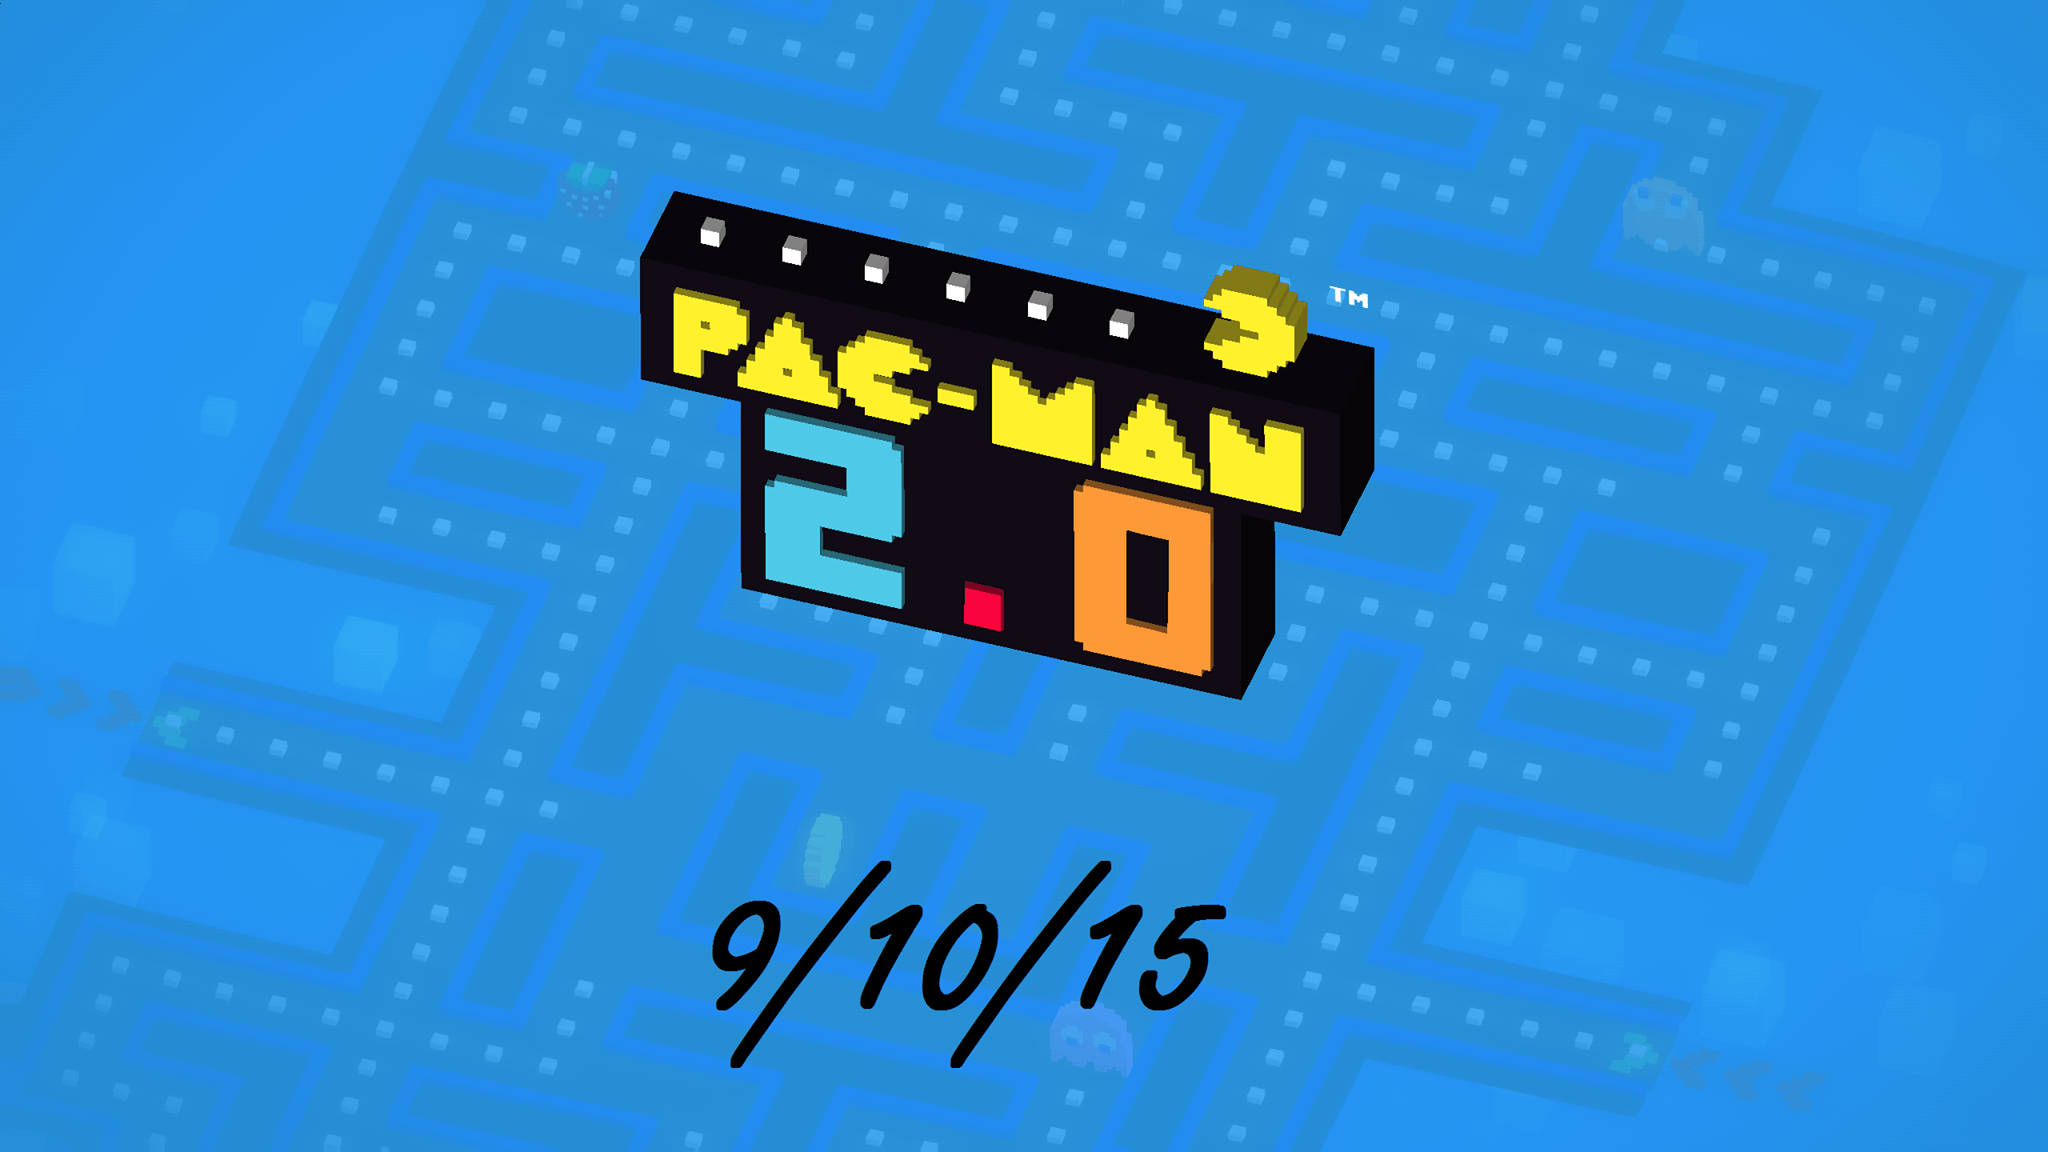 PacMan 9.10.2015